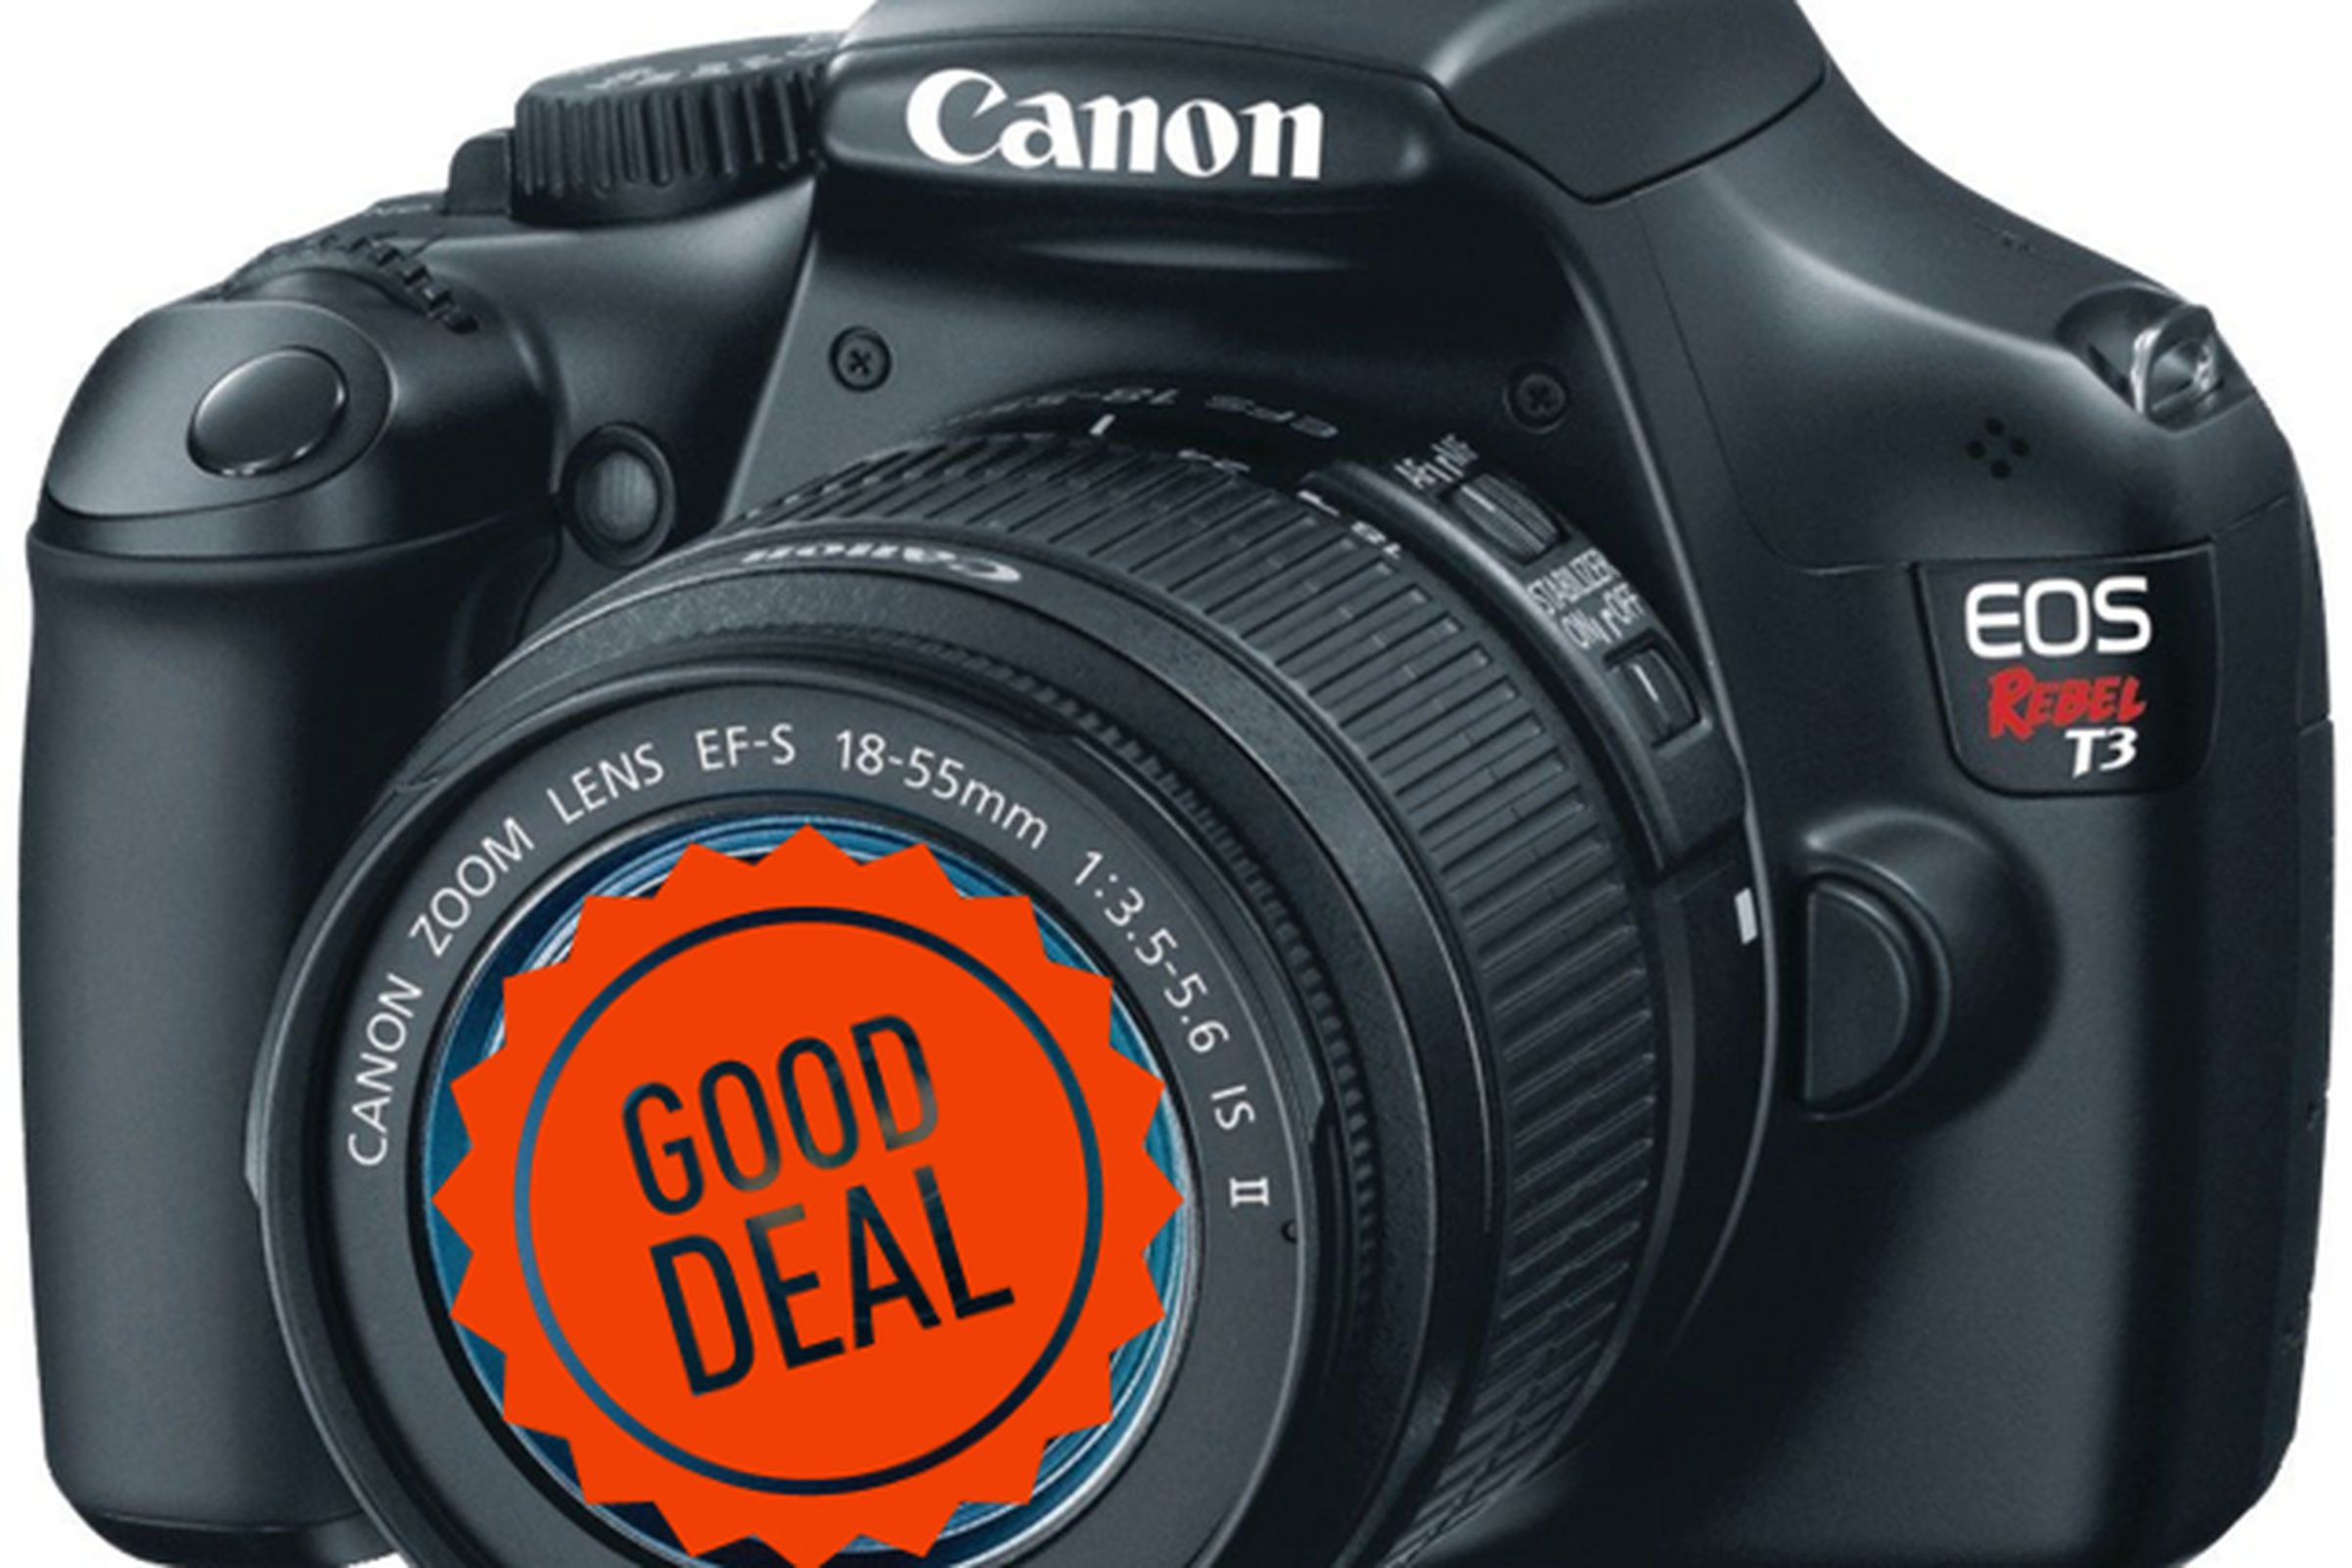 Canon T3 Good Deal